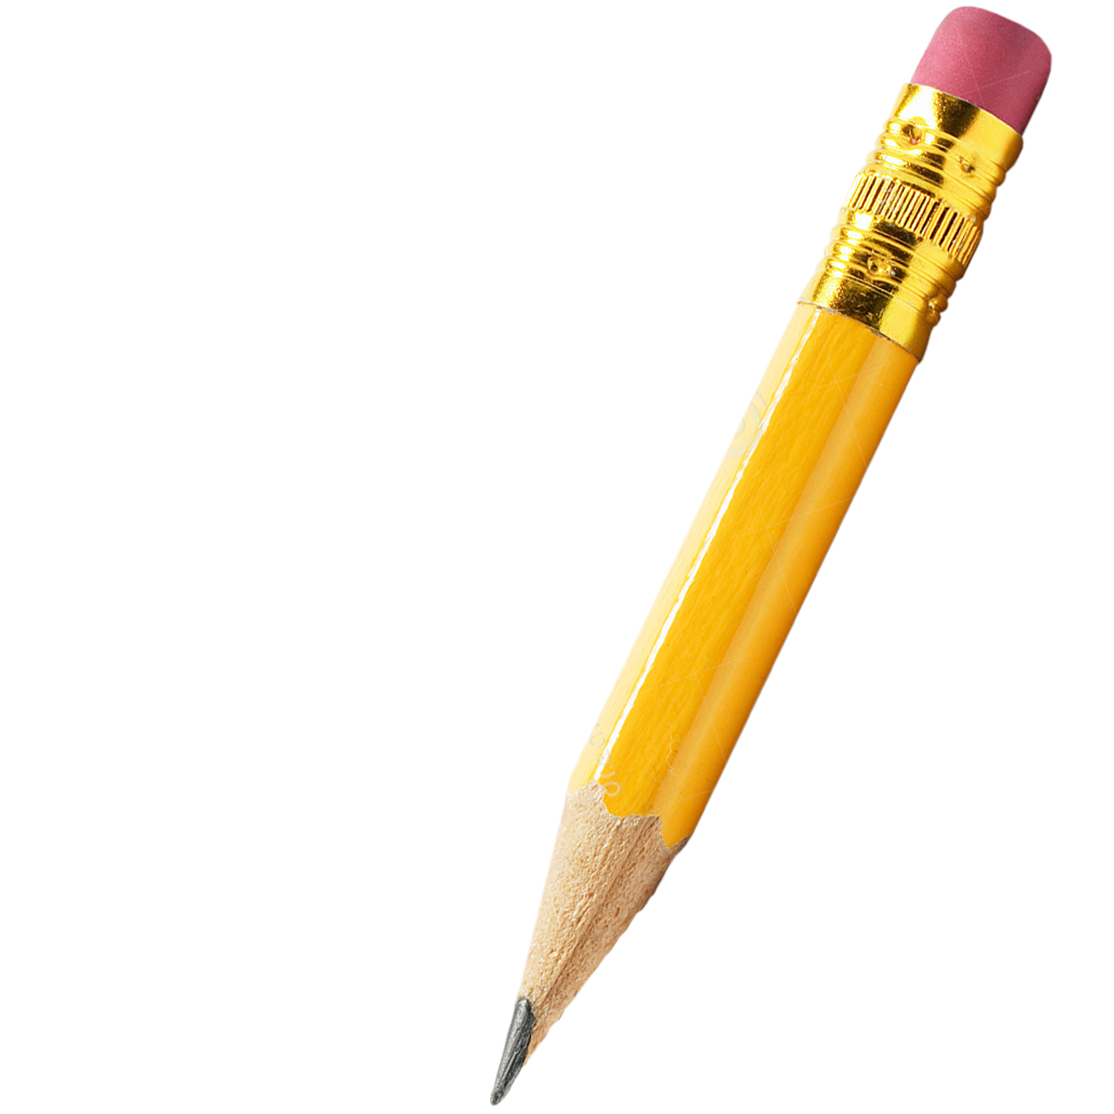 Pencil Png PNG Image